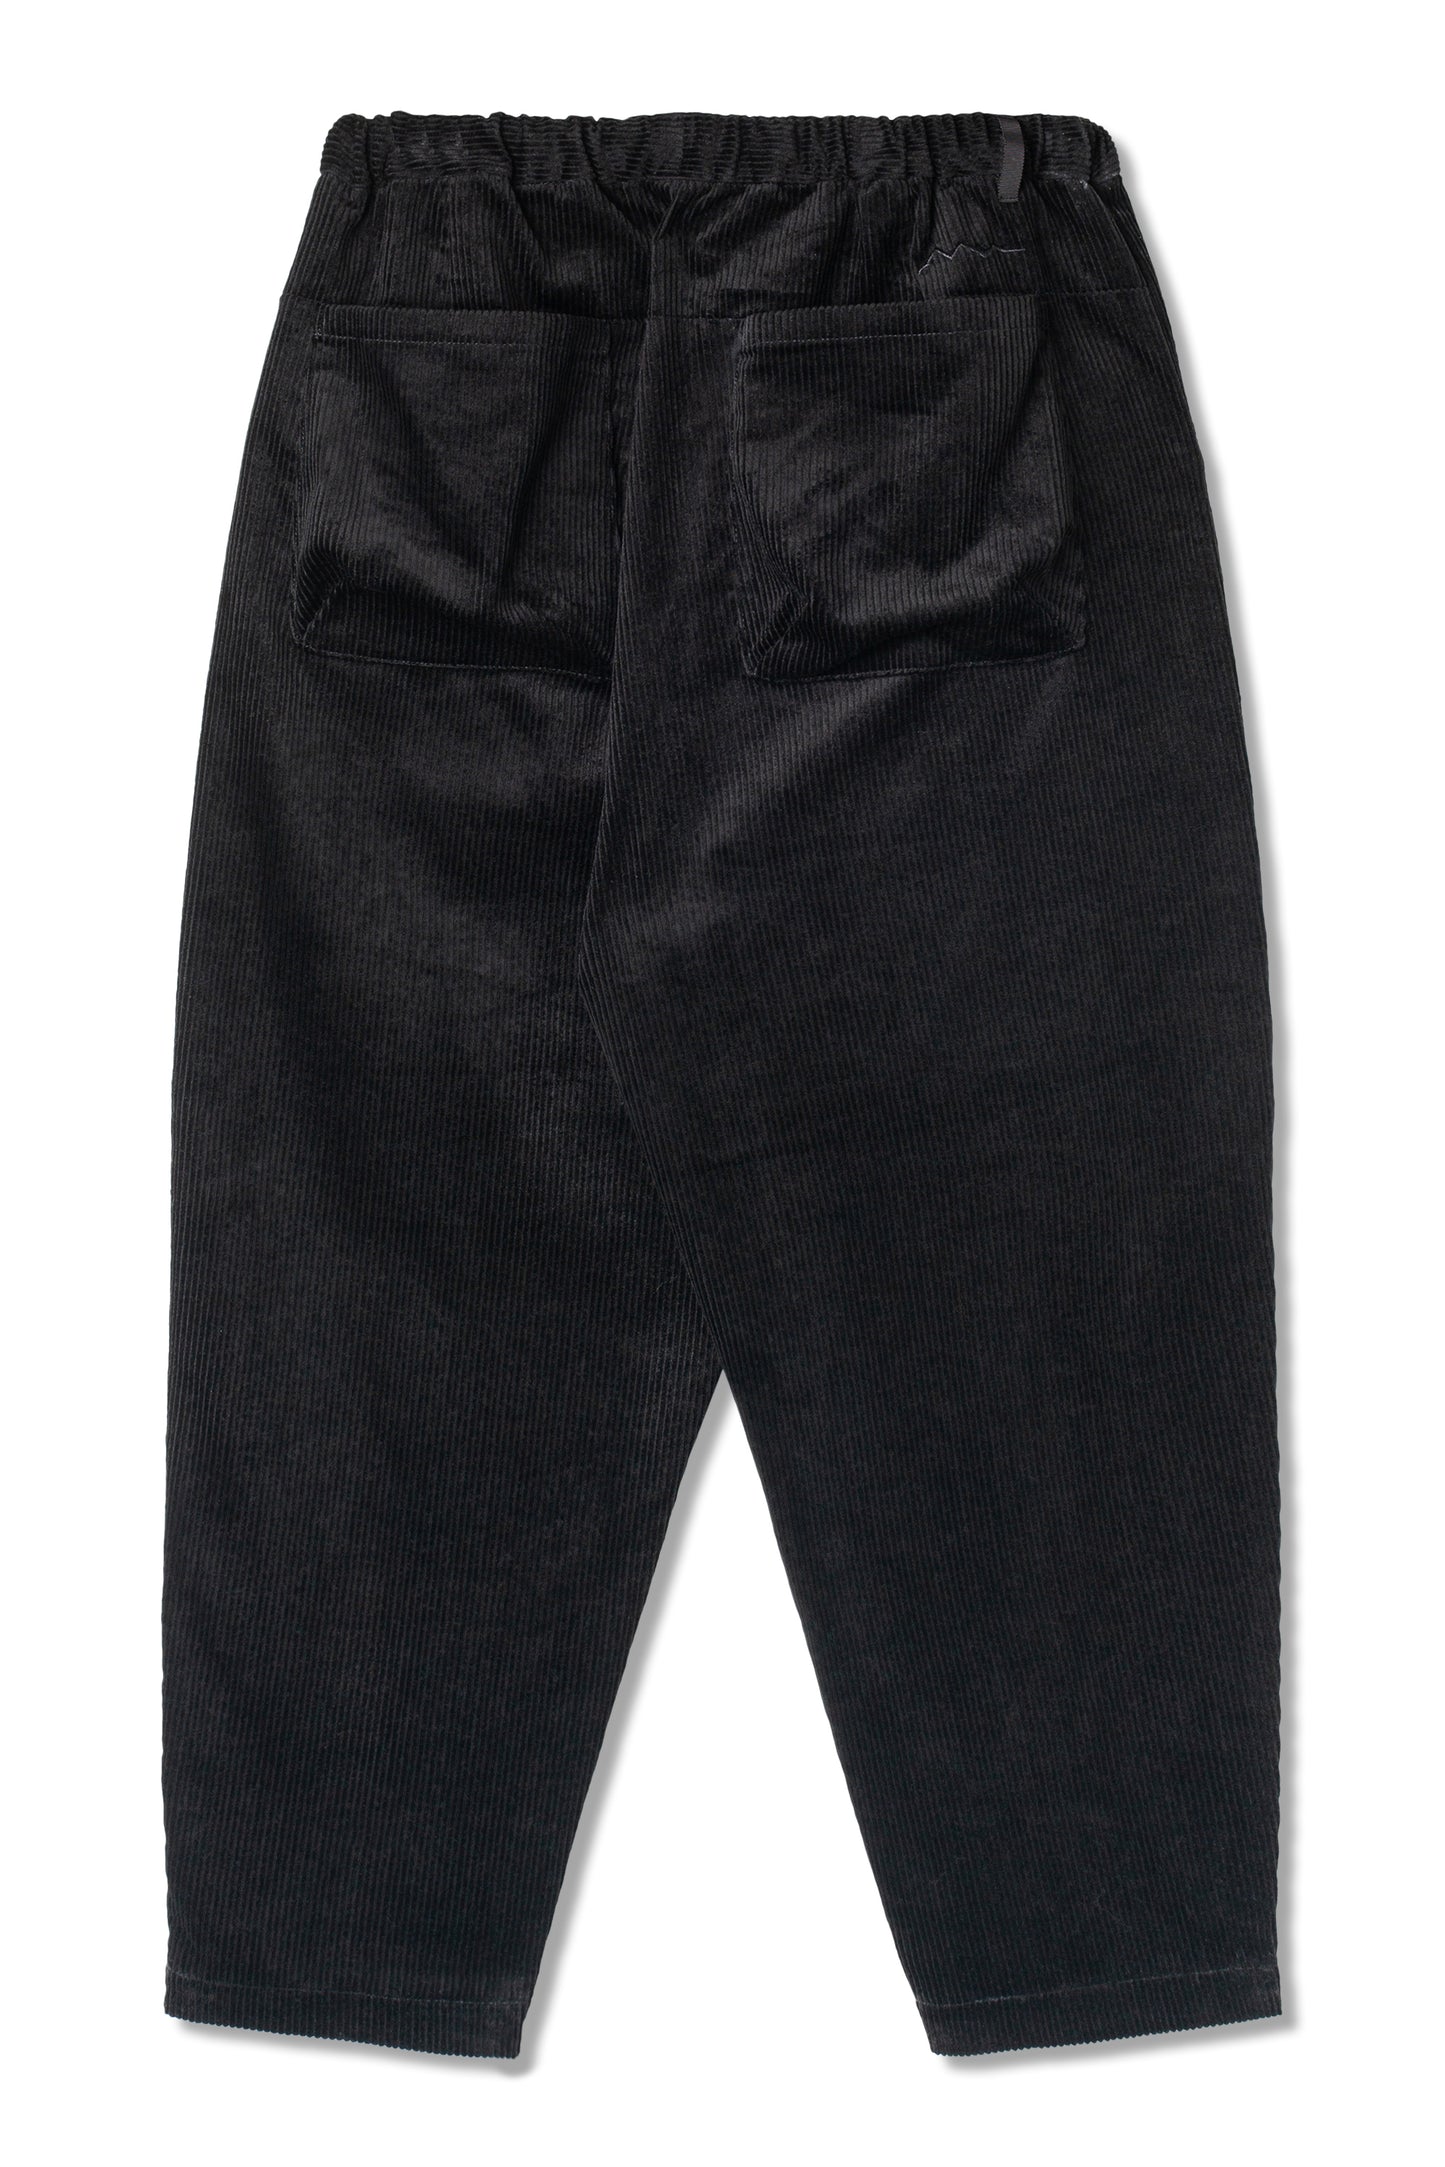 8W Cocoon Pant (Black)